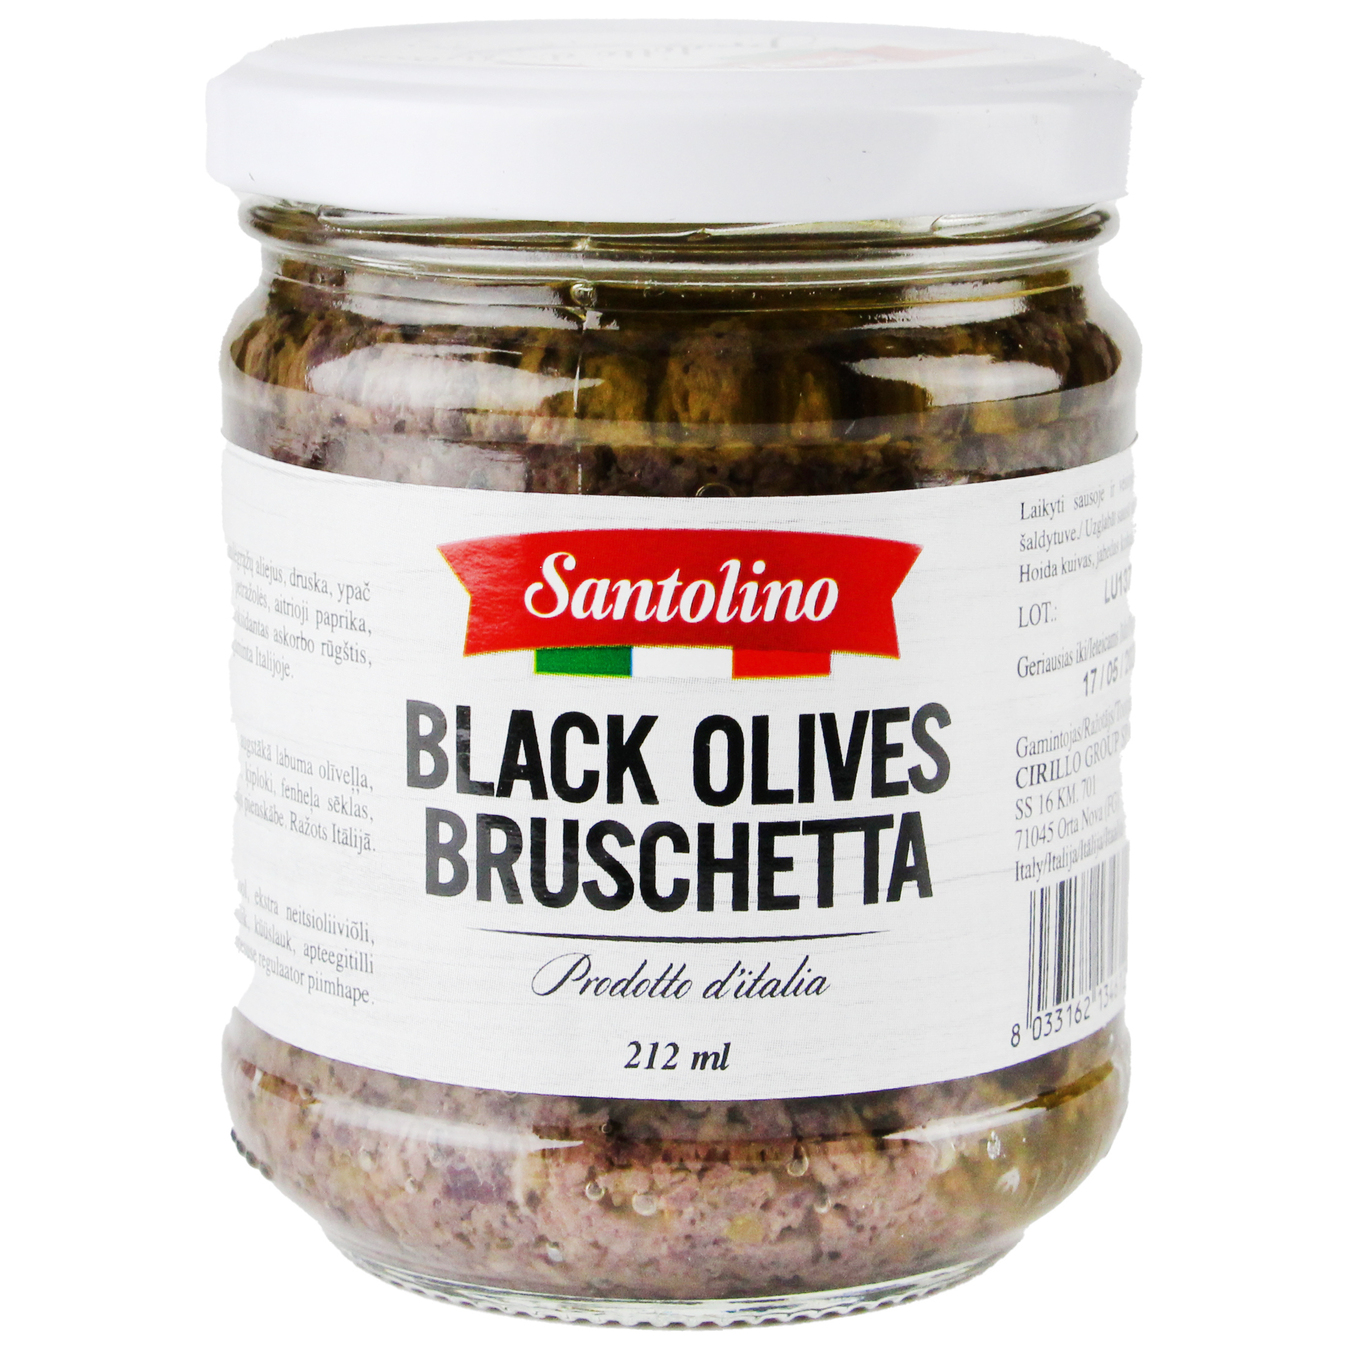 Santolino bruschetta from black olives 212ml